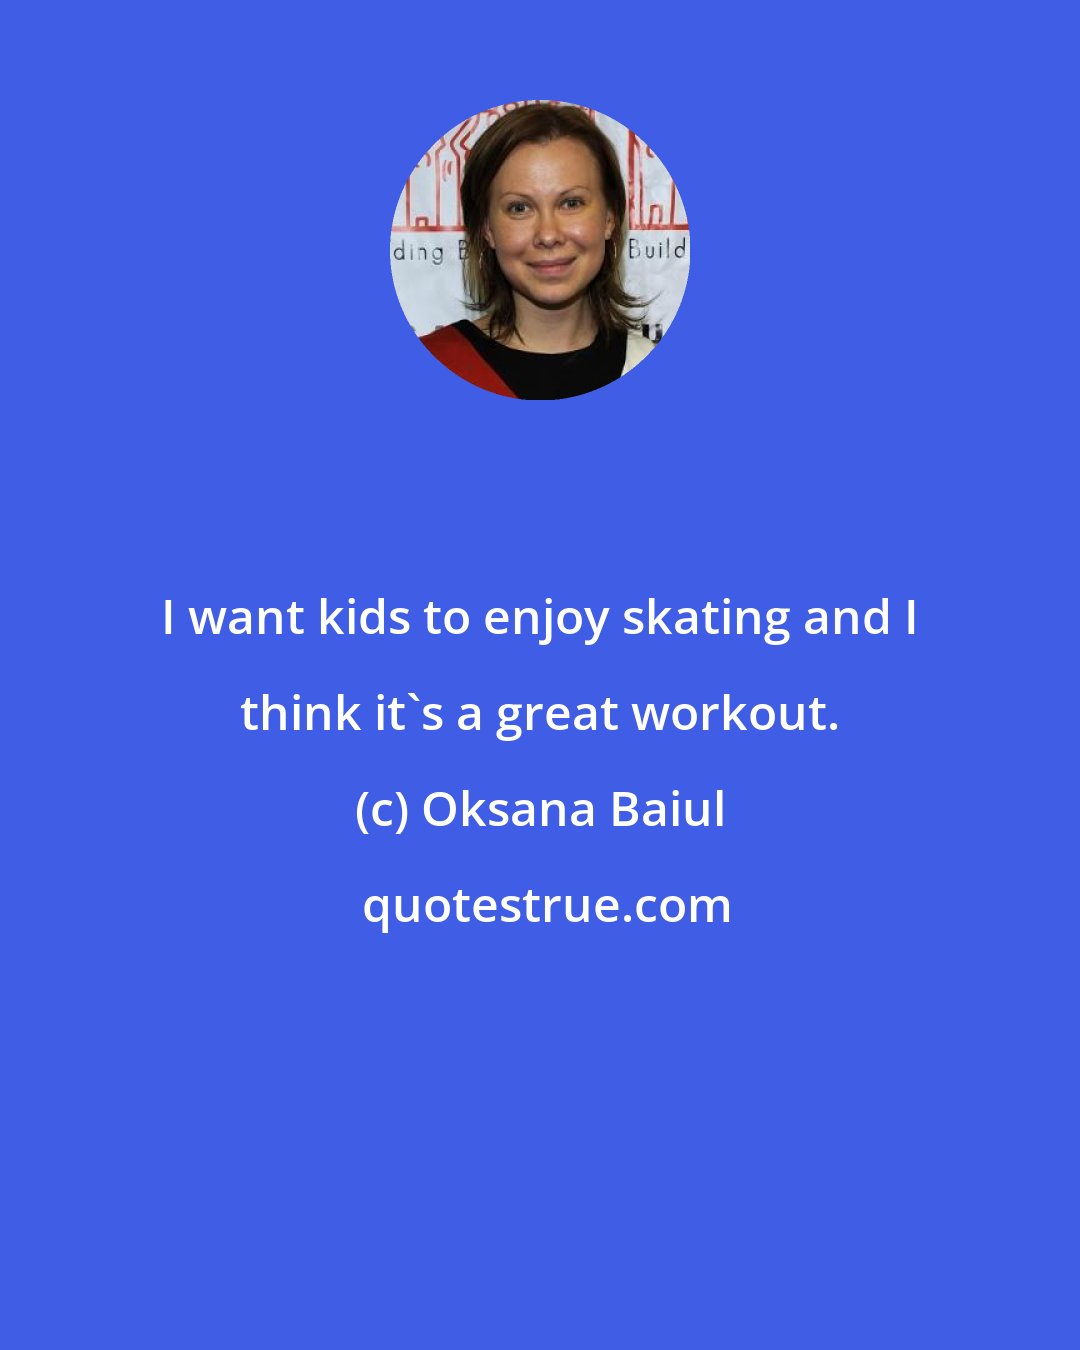 Oksana Baiul: I want kids to enjoy skating and I think it's a great workout.